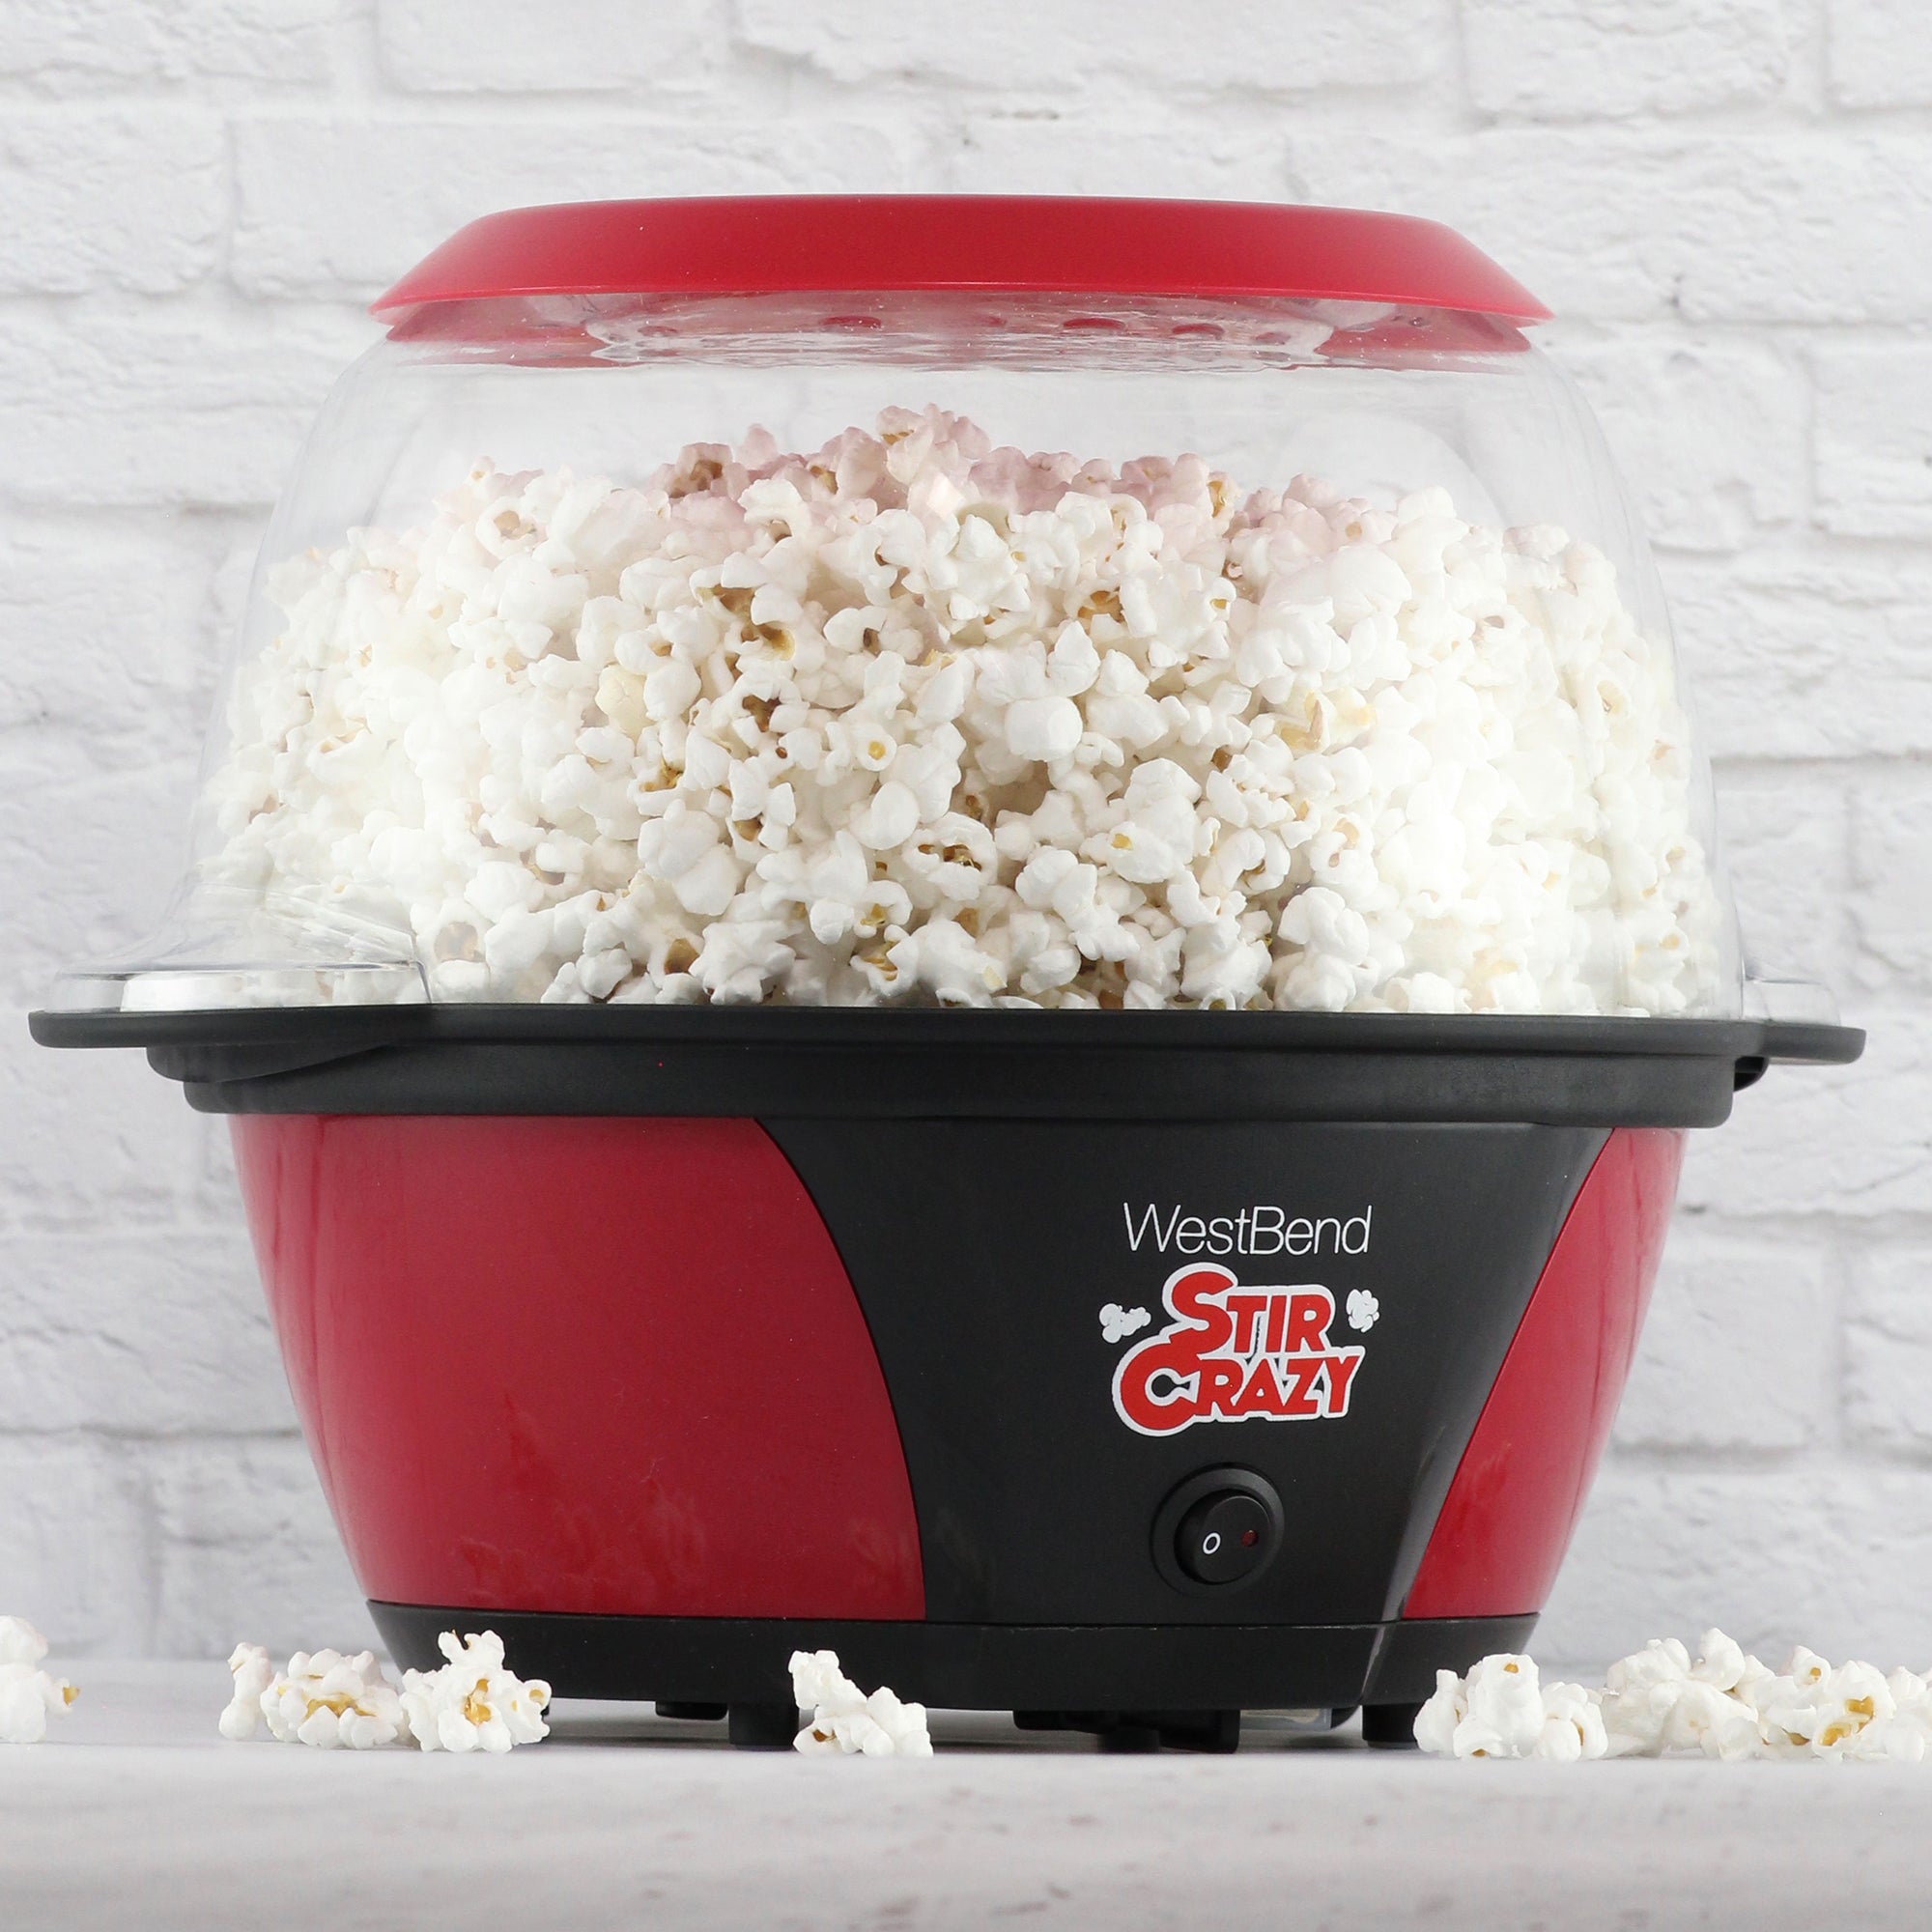 Stir crazy popcorn: Directions, calories, nutrition & more